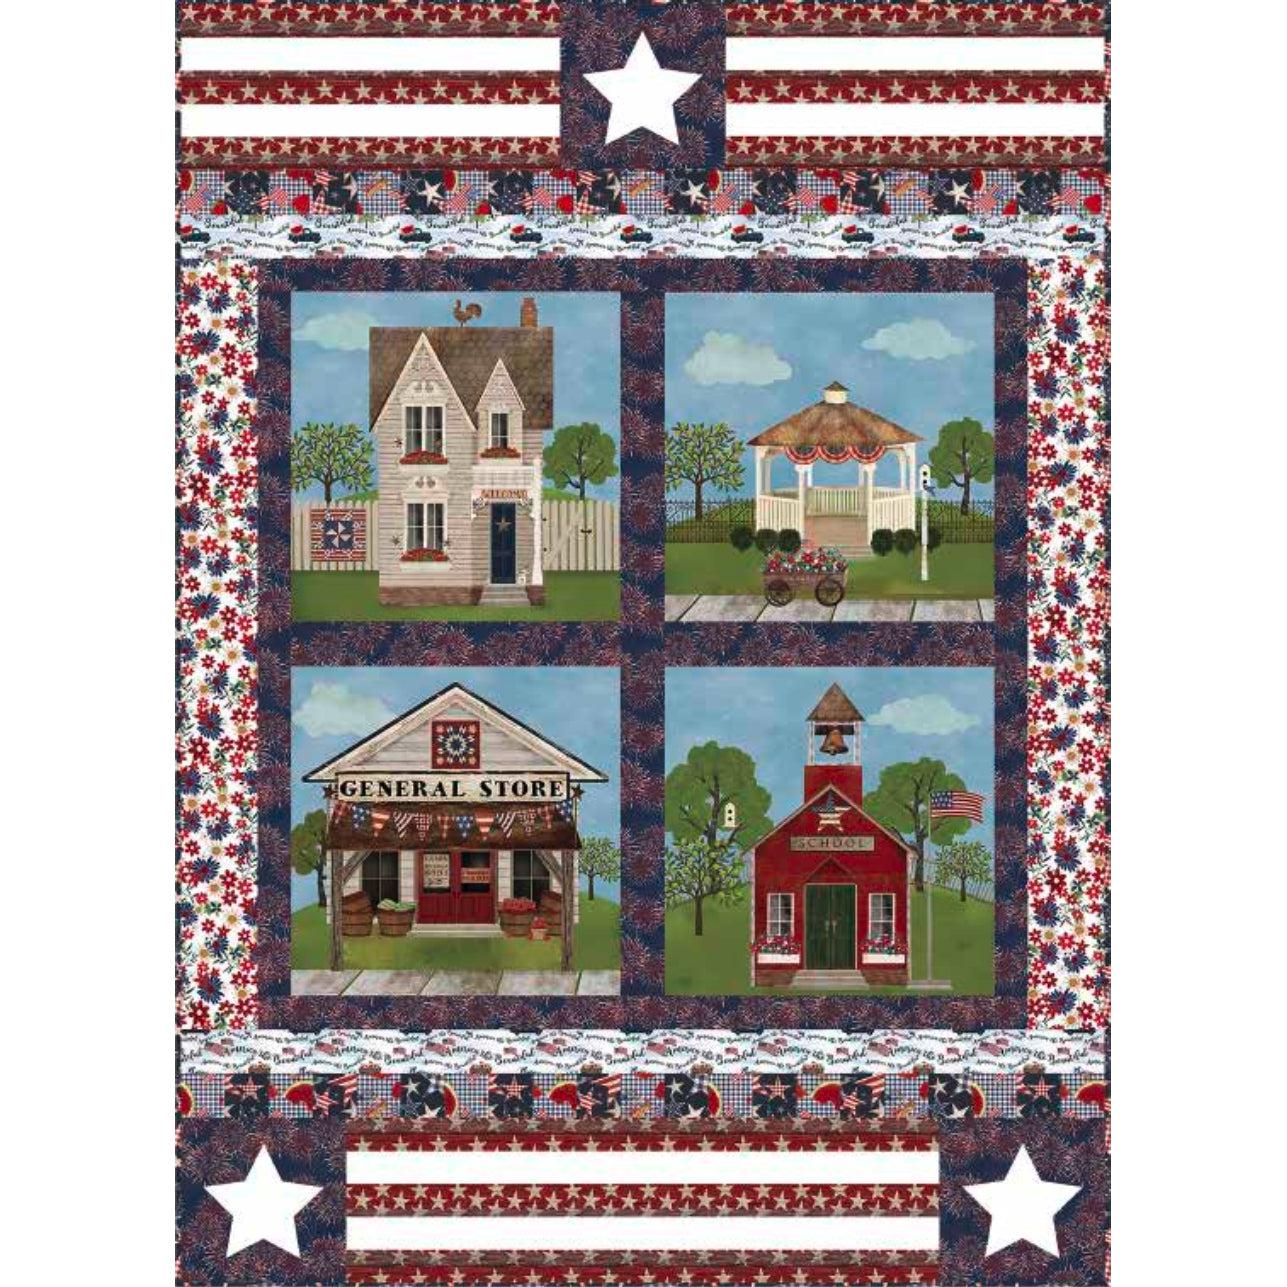 Sweet Land of Liberty Quilt Pattern - Free Digital Download